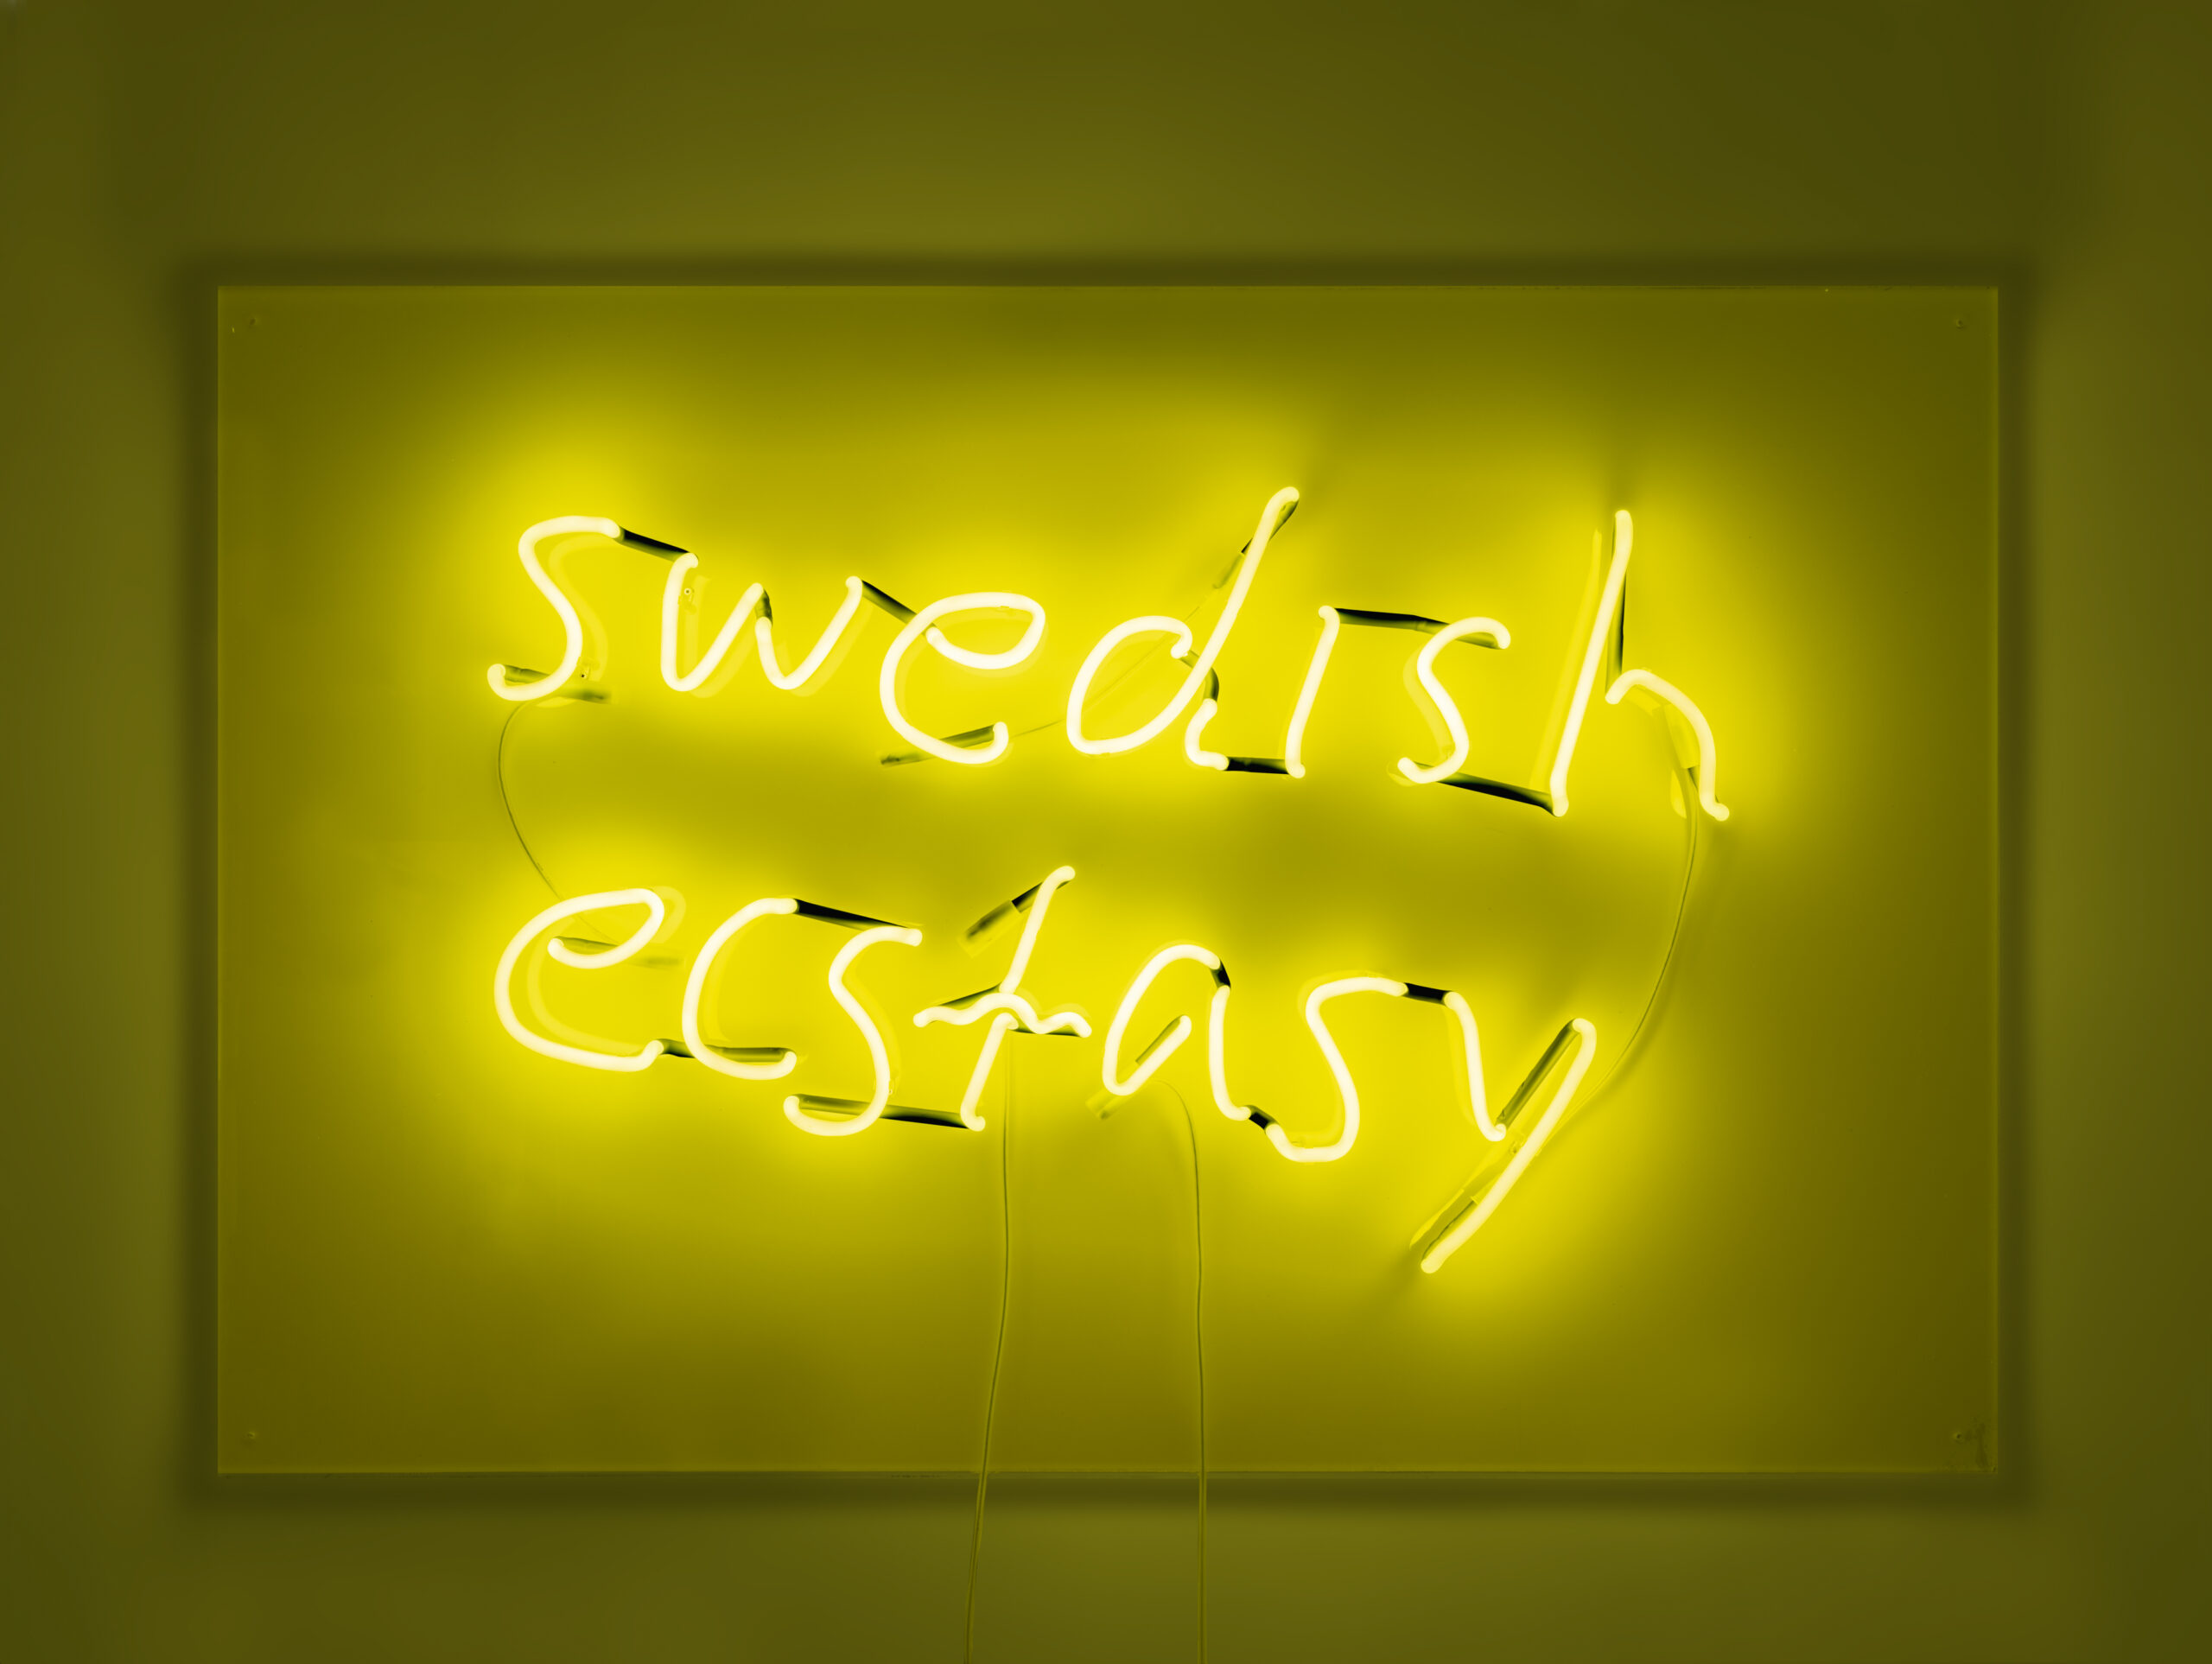 1_Swedish ecstasy